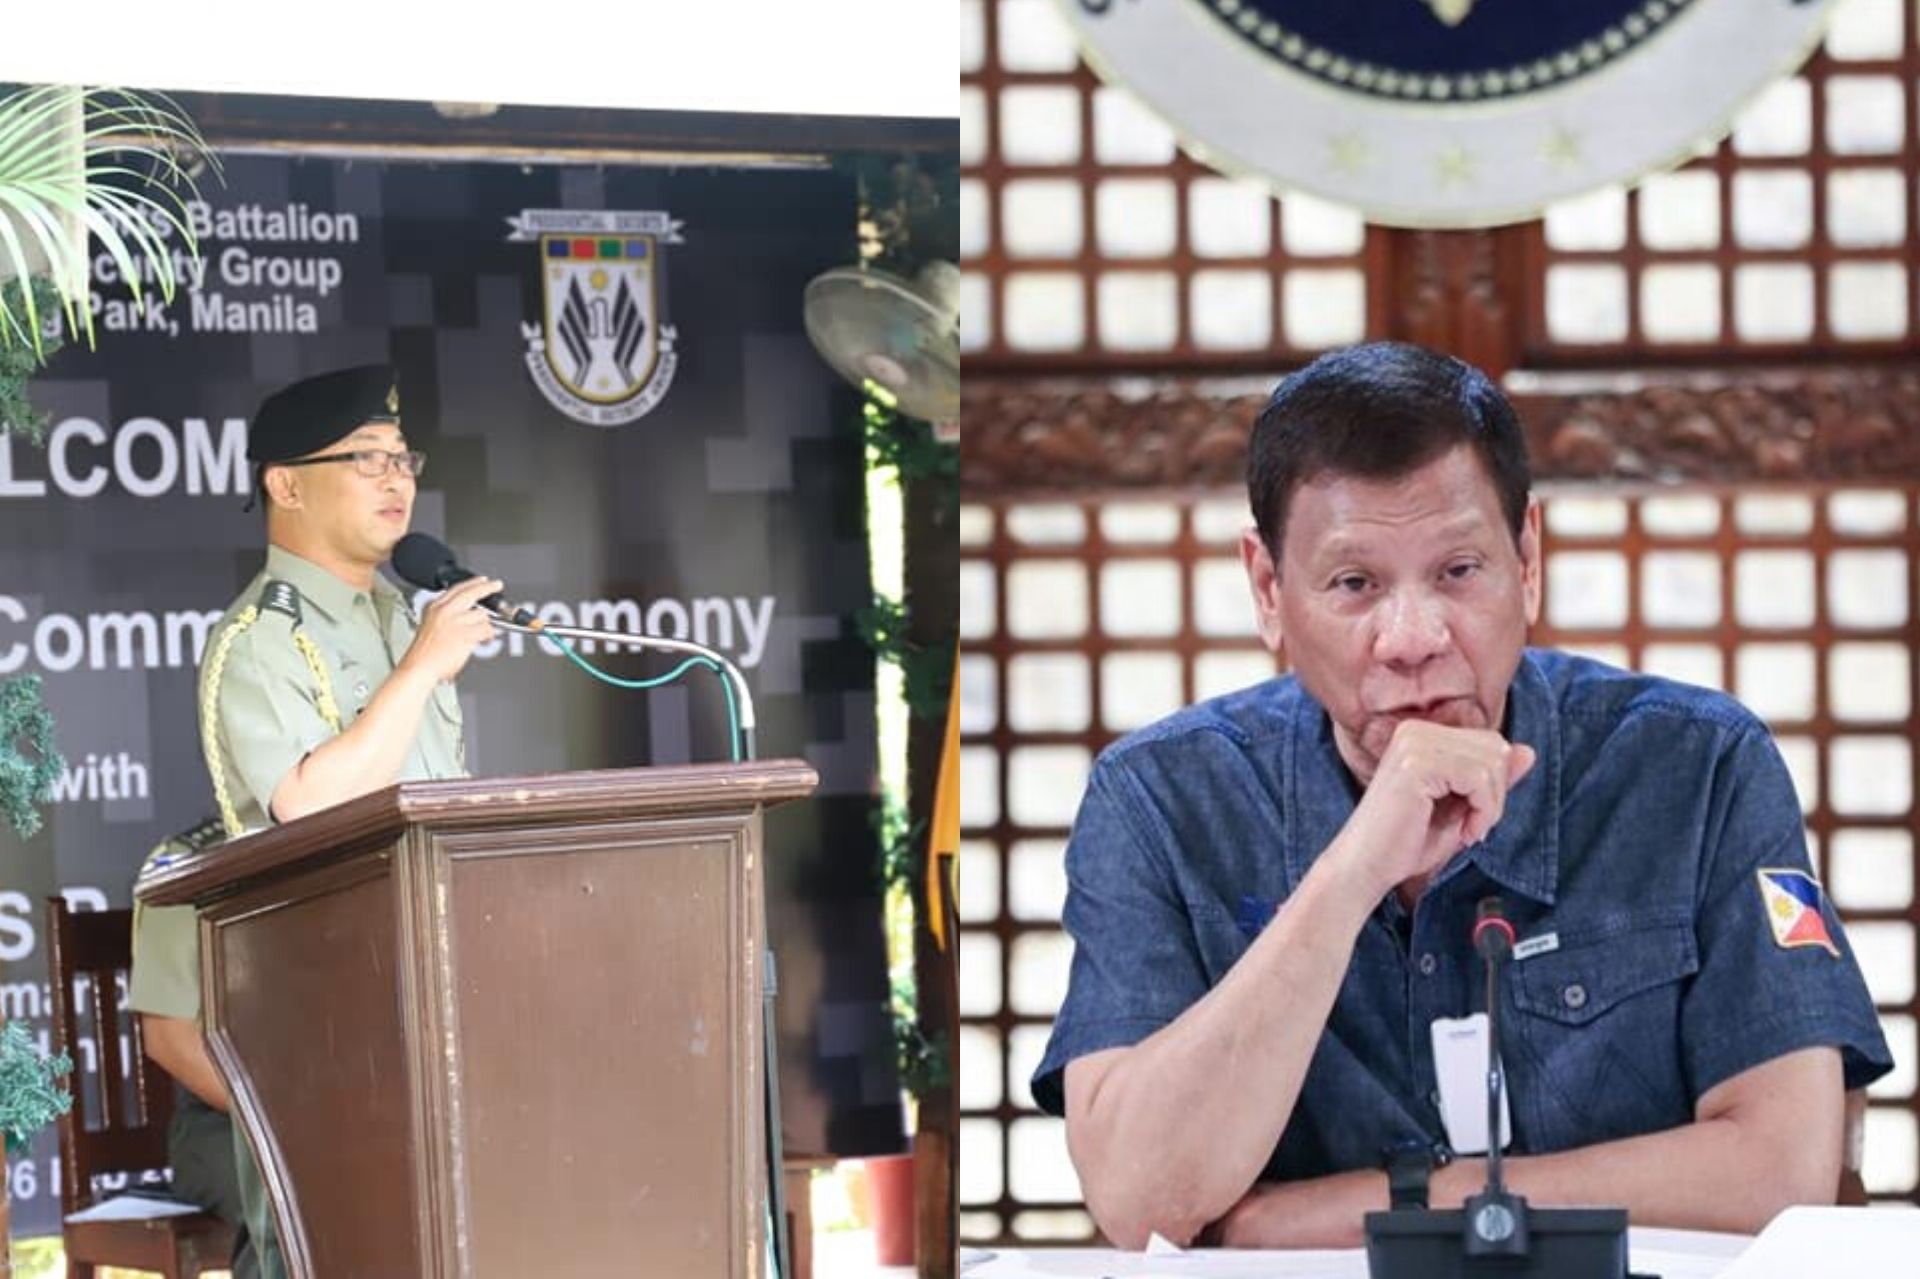 PSG Commander Col. Jesus Durante III <I></noscript>Photo: PSG / FB</i>, President Rodrigo Duterte <i>Photo: Presidential Communications Group / FB</i>